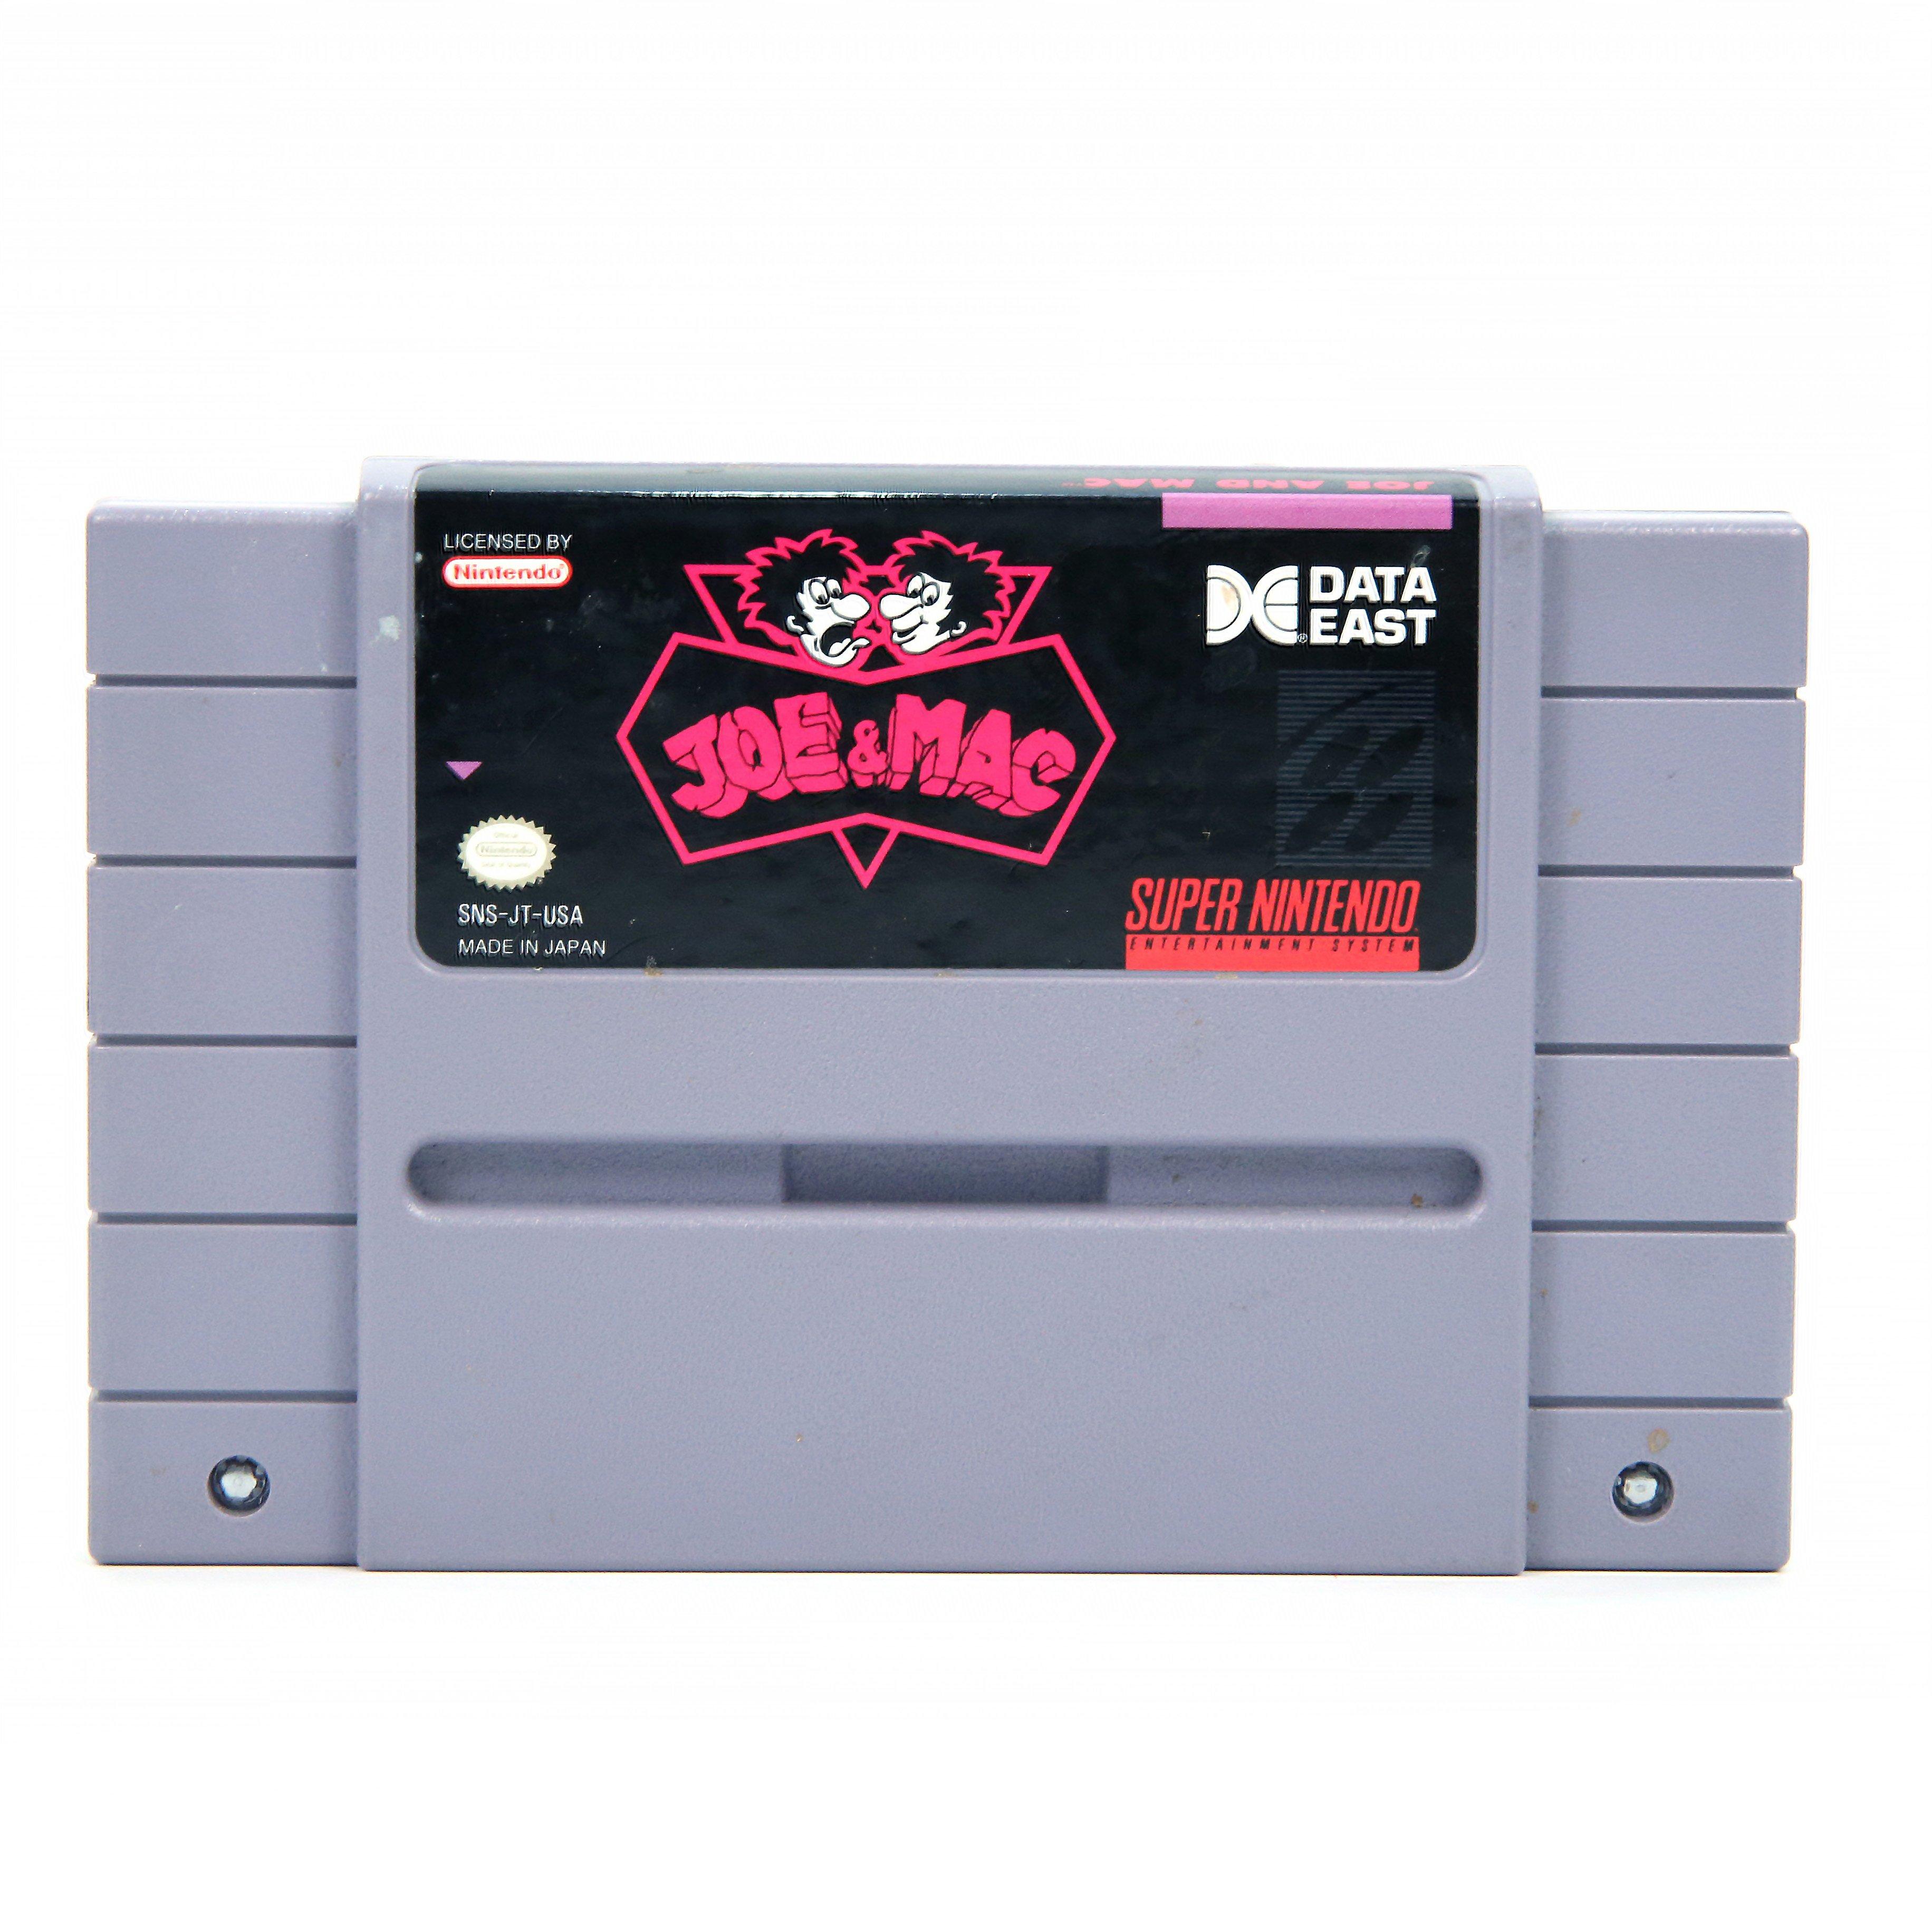 Joe and Mac - Super Nintendo